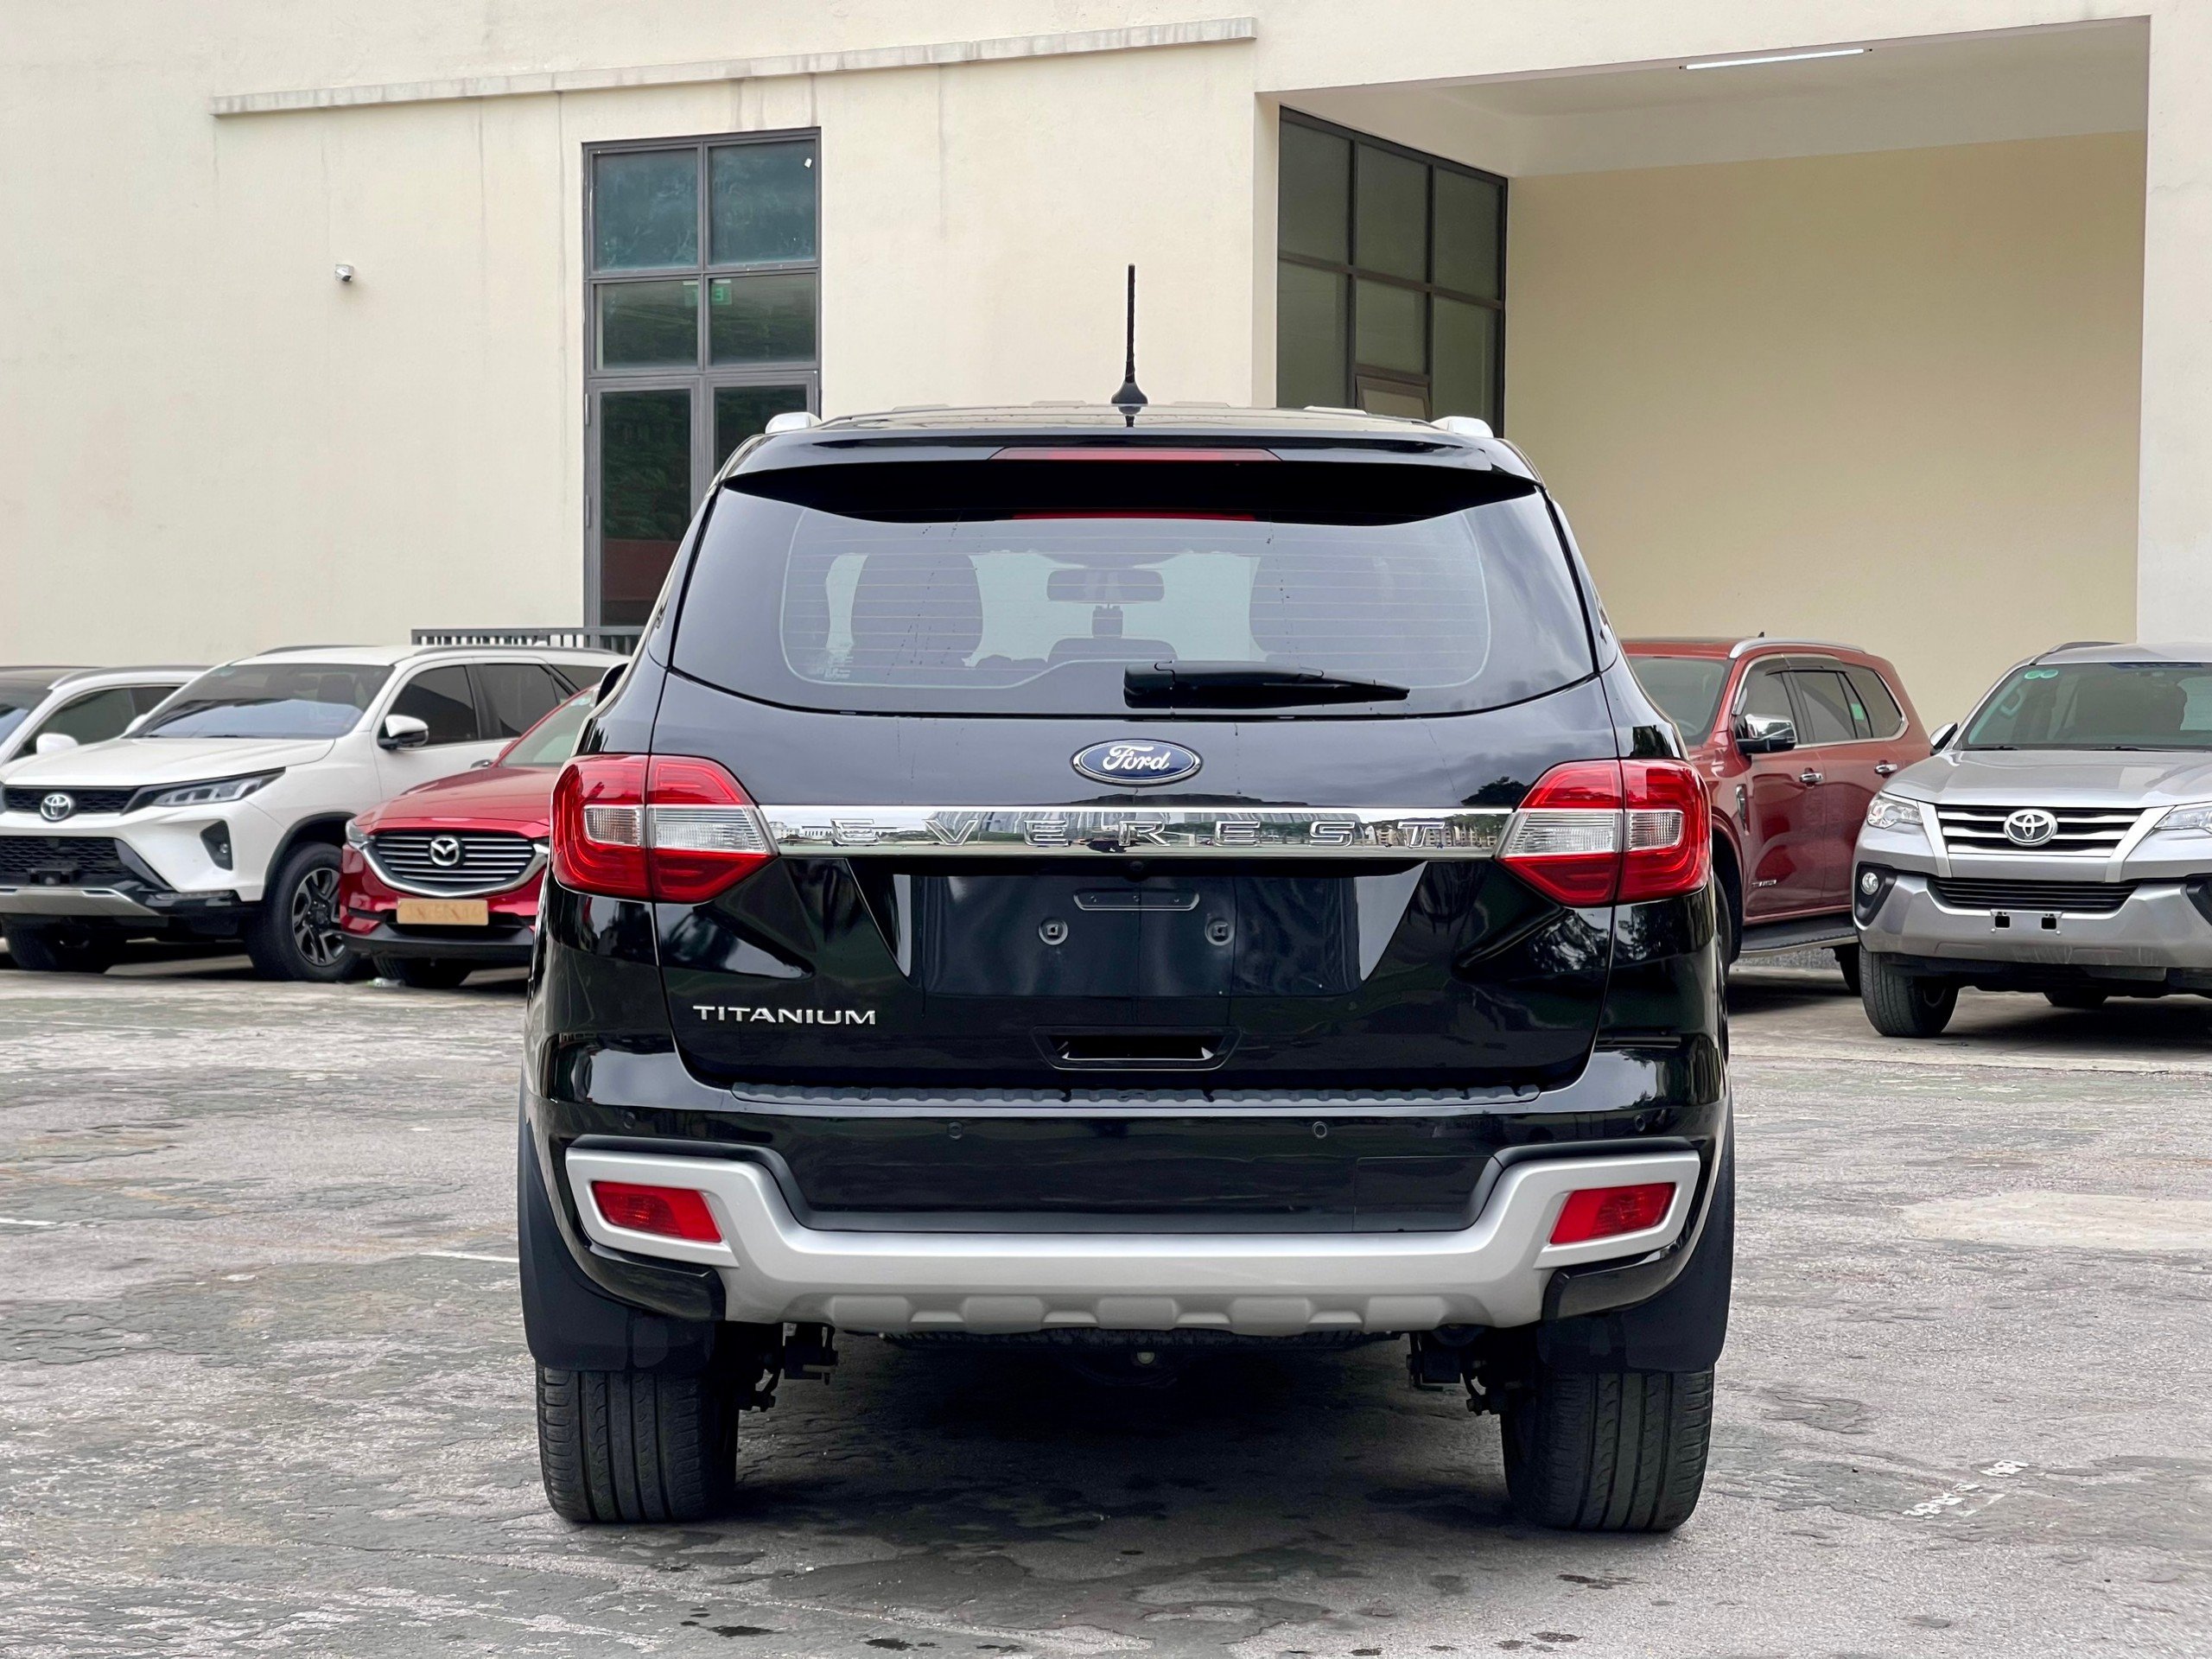 Cần bán xe Ford Everest Titanium 2WD 2.0 sản xuất 2019 